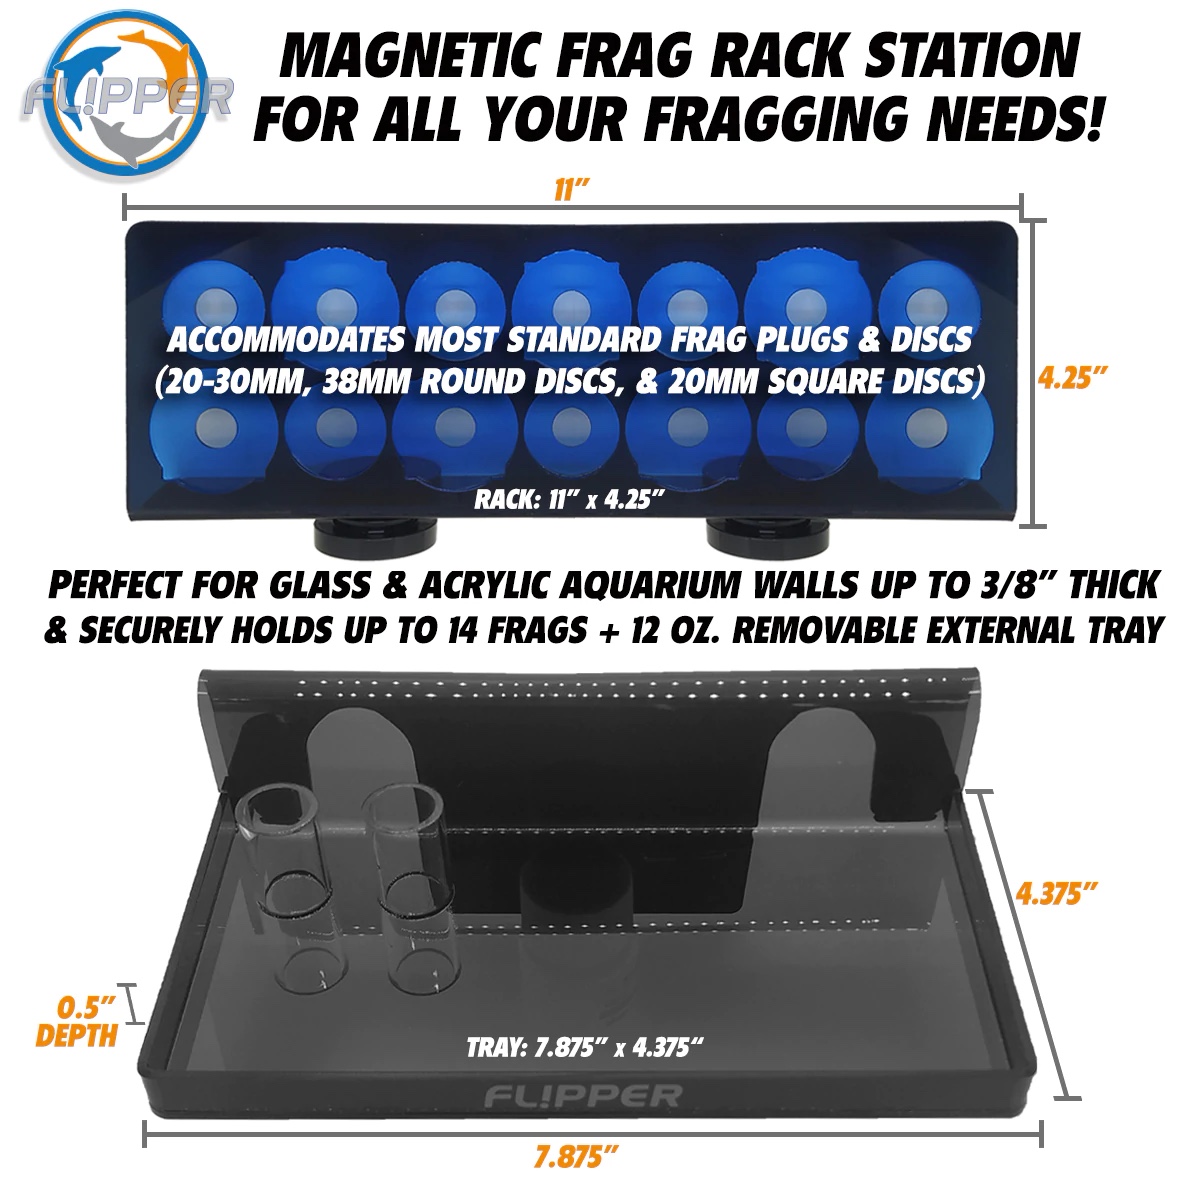 Flipper Magnetic Frag Station